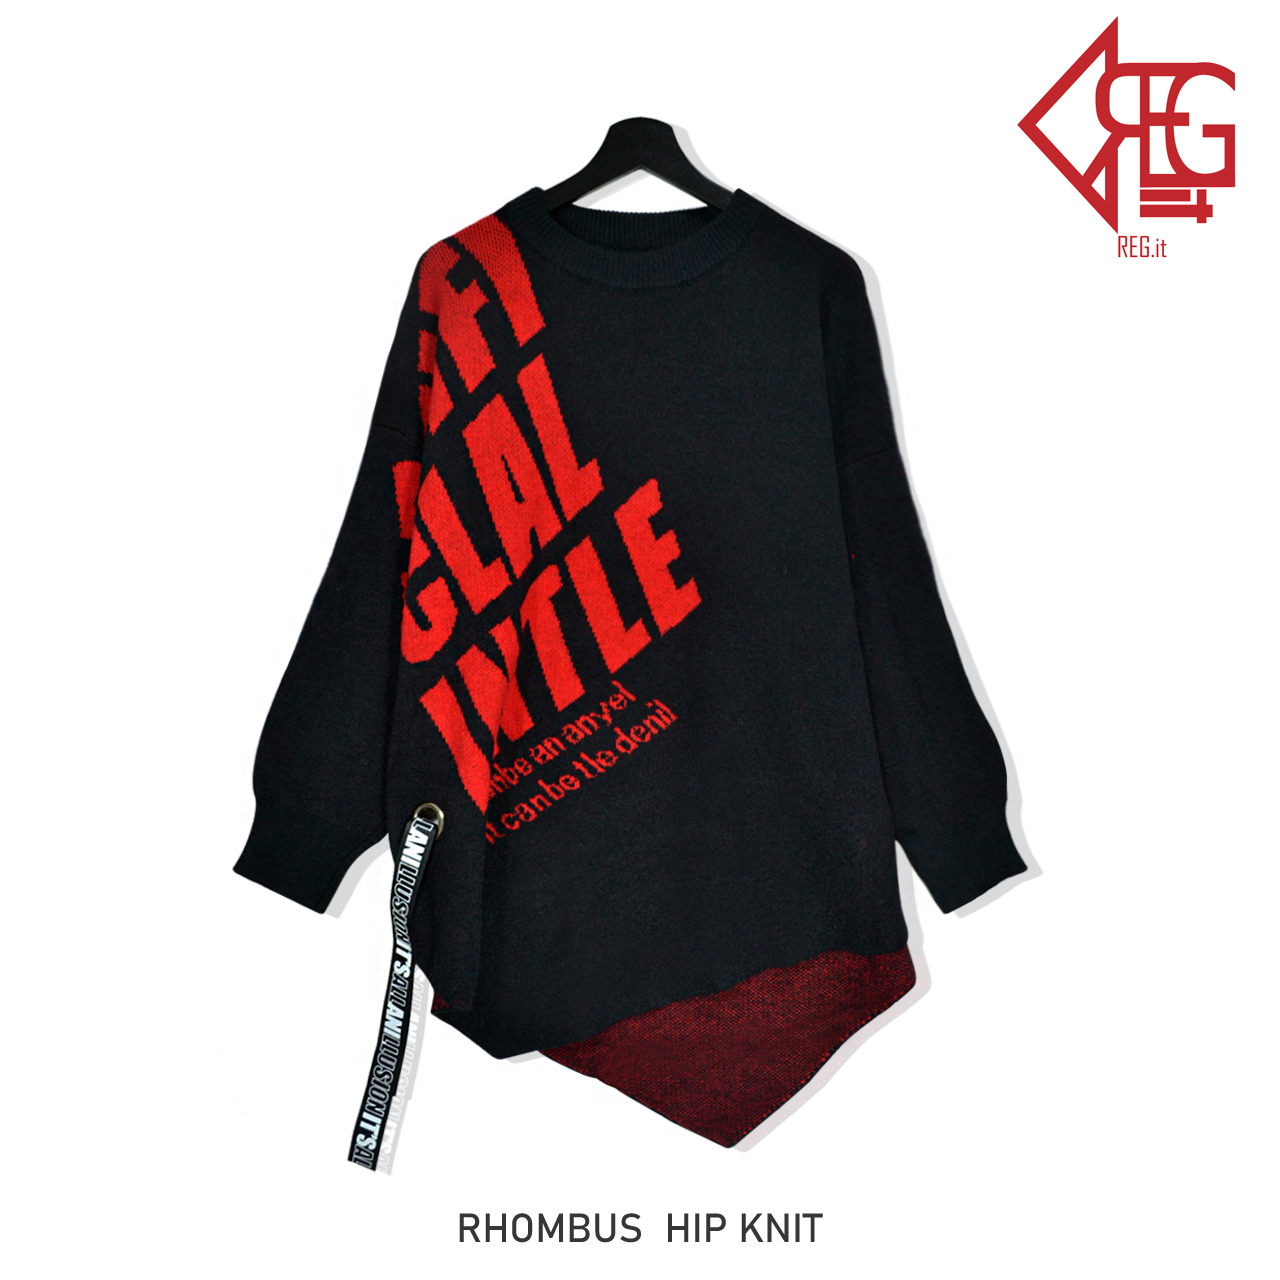 Regit 即納 Rhombus Hip Knit 韓国ファッション かわいい おしゃれ オルチャンファッション ユニーク 個性的 Regit